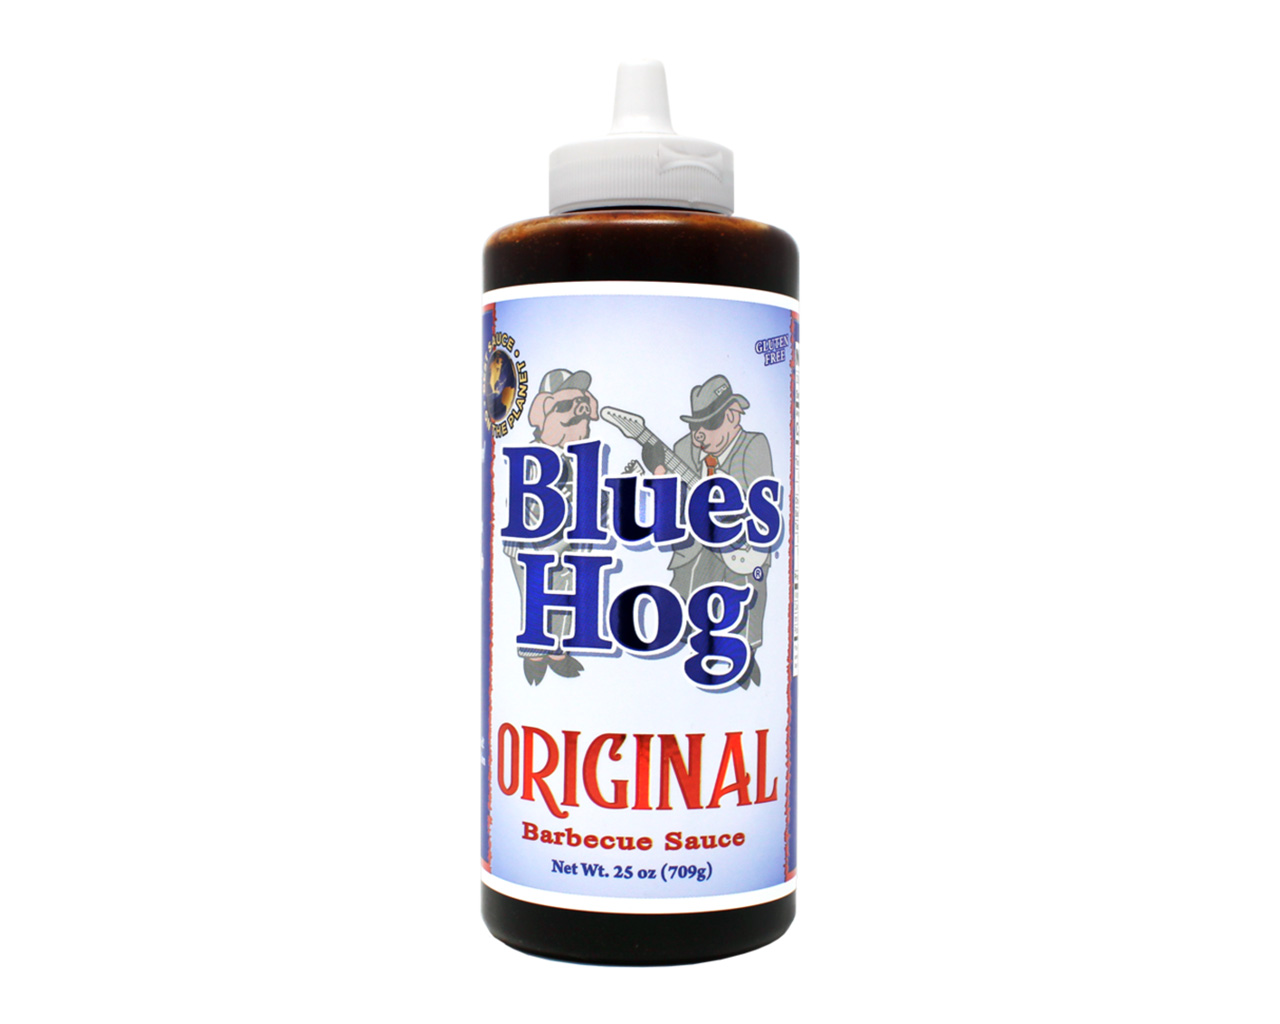 Blues Hog Original BBQ Sauce - 709g Squeeze Bottle, , hi-res image number null